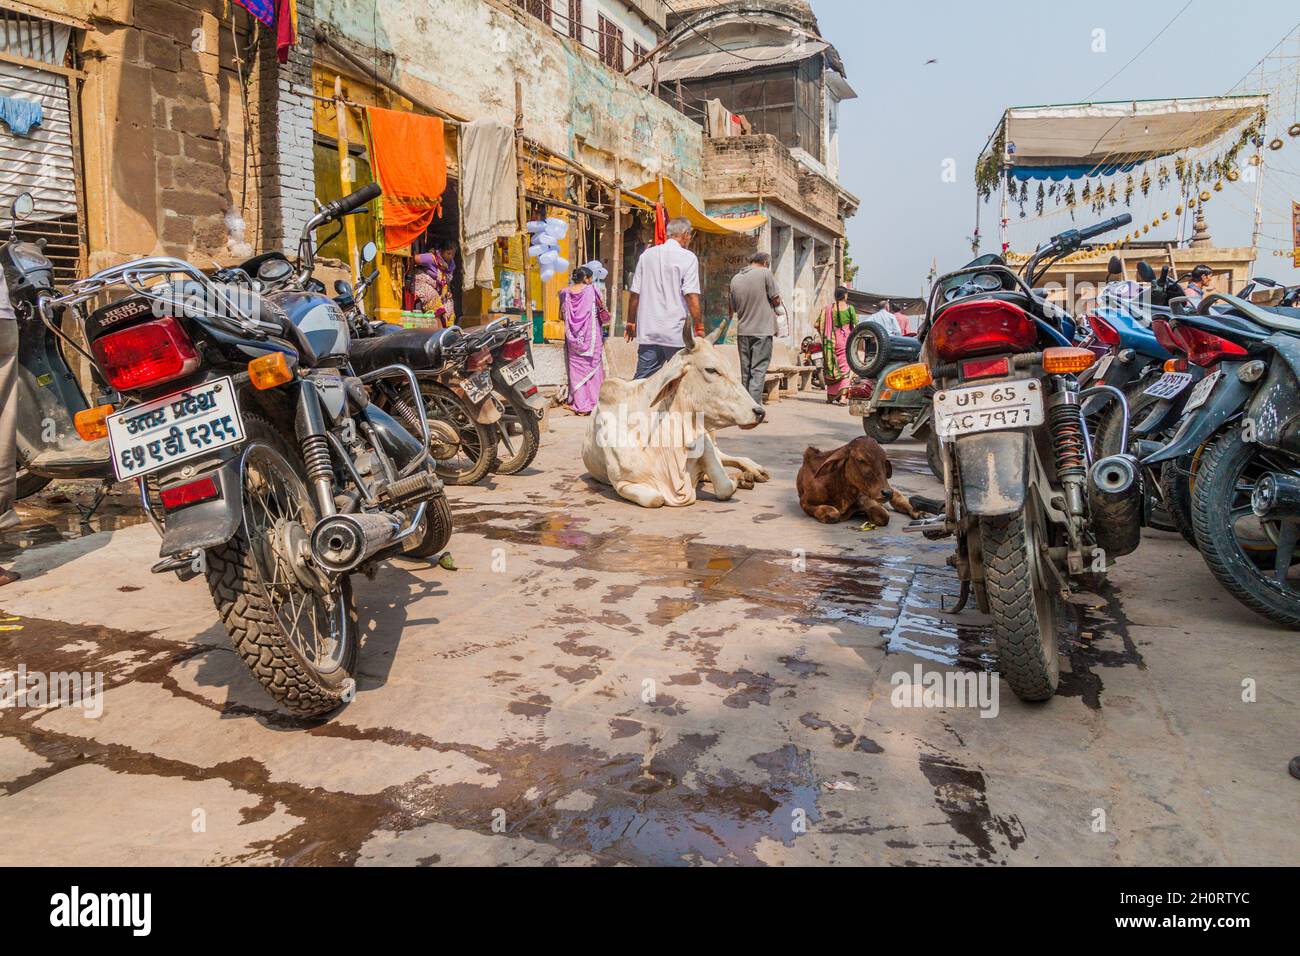 VARANASI, INDIA - OCTOBER 25, 2016: View of cows and motorbikes on a street in Varanasi, India Stock Photo